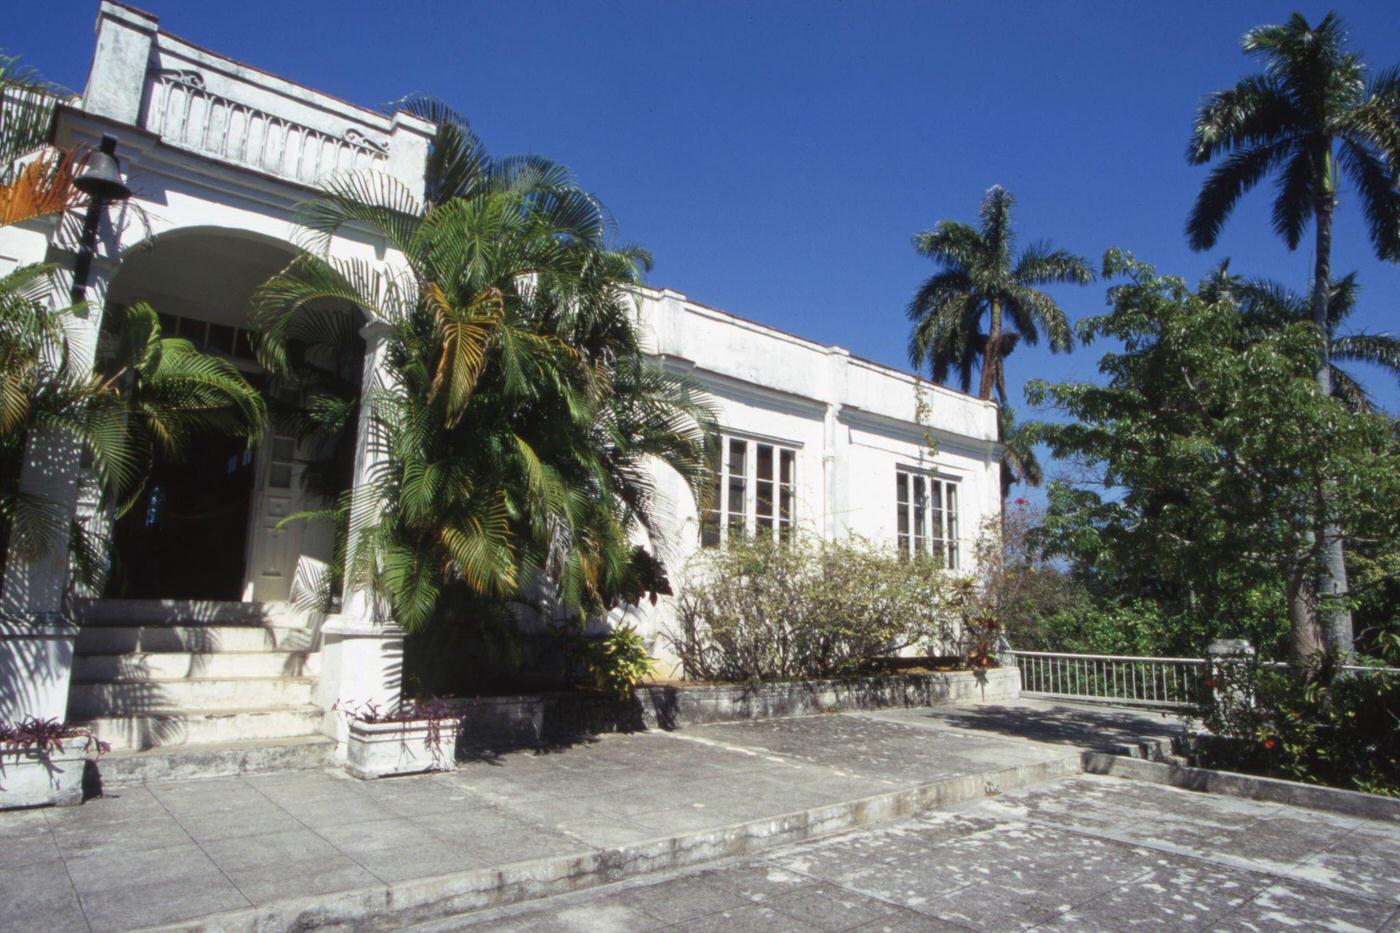 Ernest Hemingway's house in Havana, Cuba, 1997.